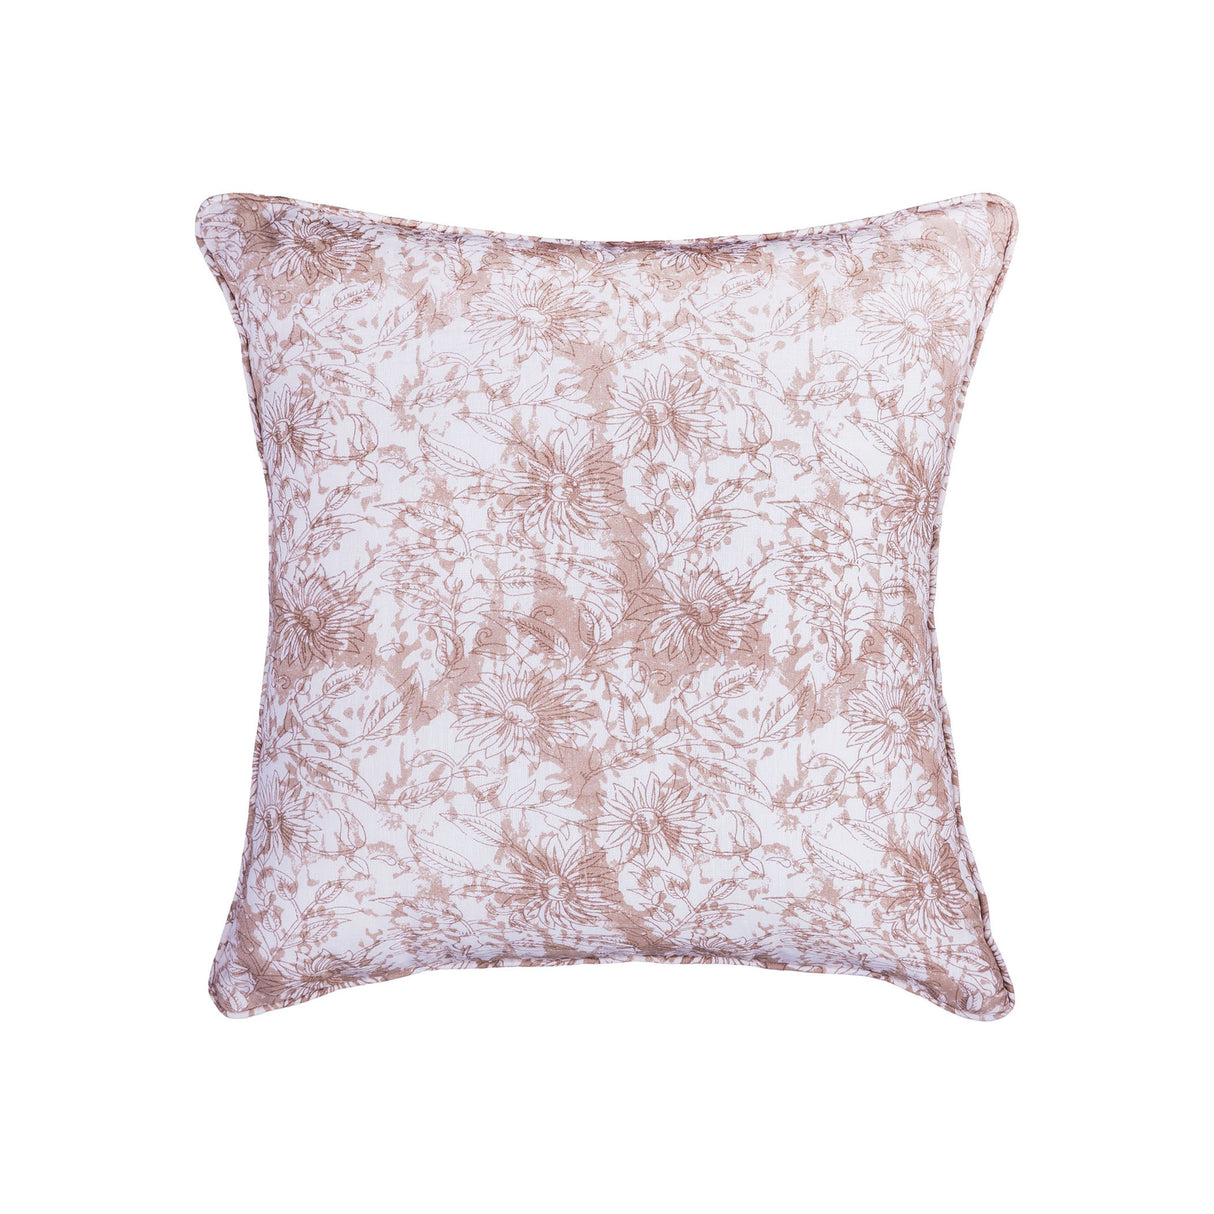 Elk PLW036 Block Print 20x20 Hand-Printed Reversible Pillow in 100% Cotton